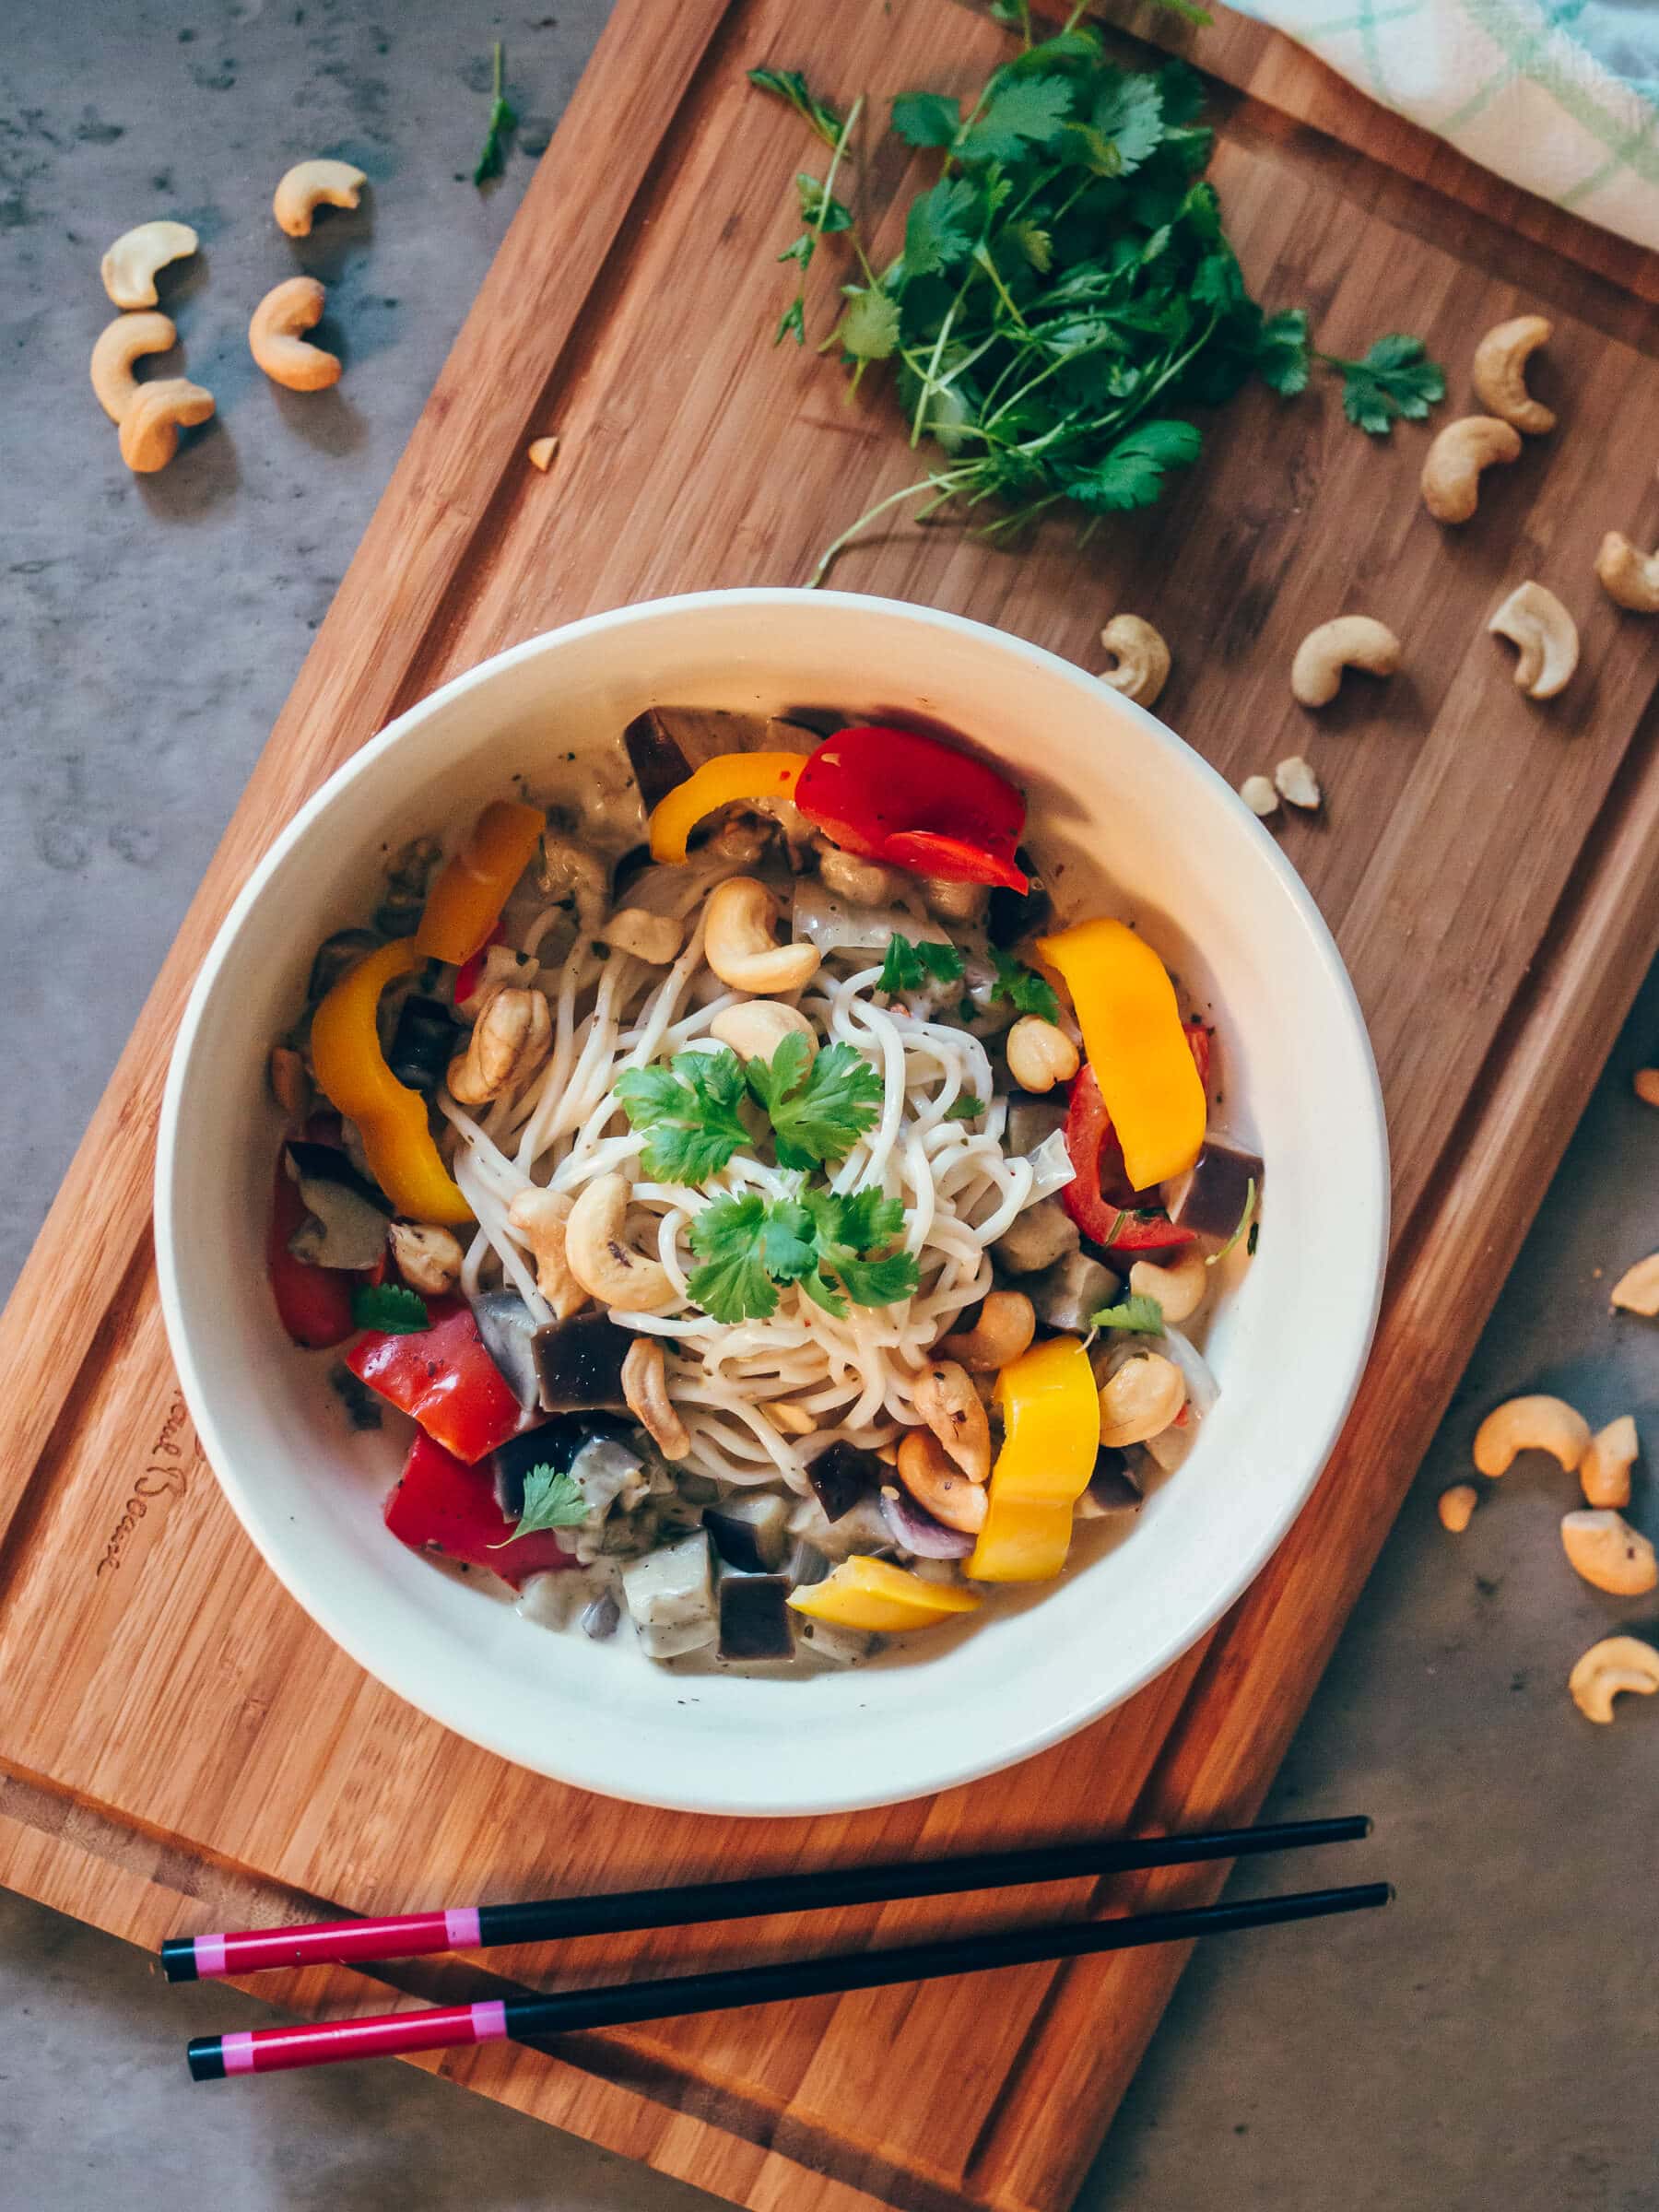 Thai style coconut & coriander noodle bowl - Quick & easy vegan recipe